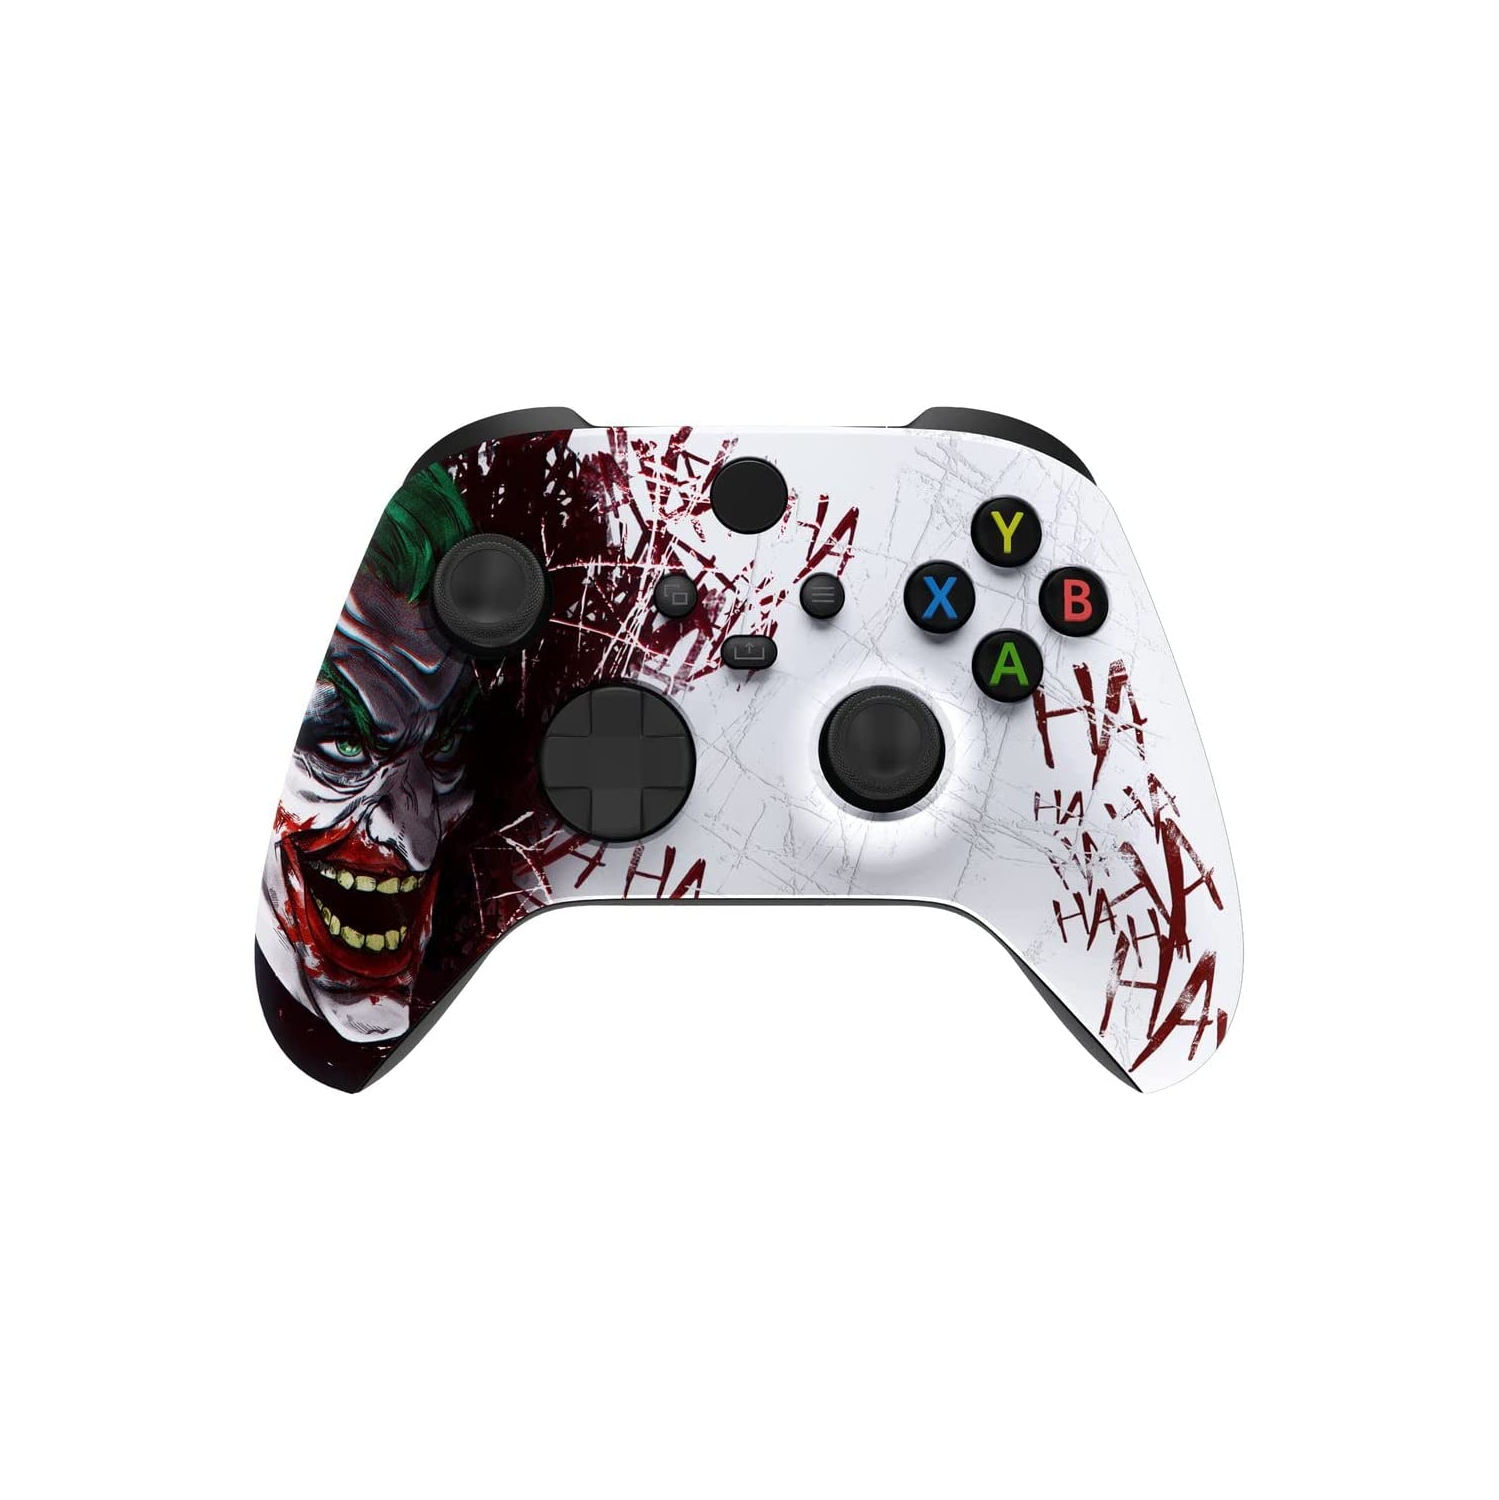 "Joker ha ha ha" UN-MODDED Custom Controller compatible with Xbox One S/X Unique Design (with 3.5 jack)